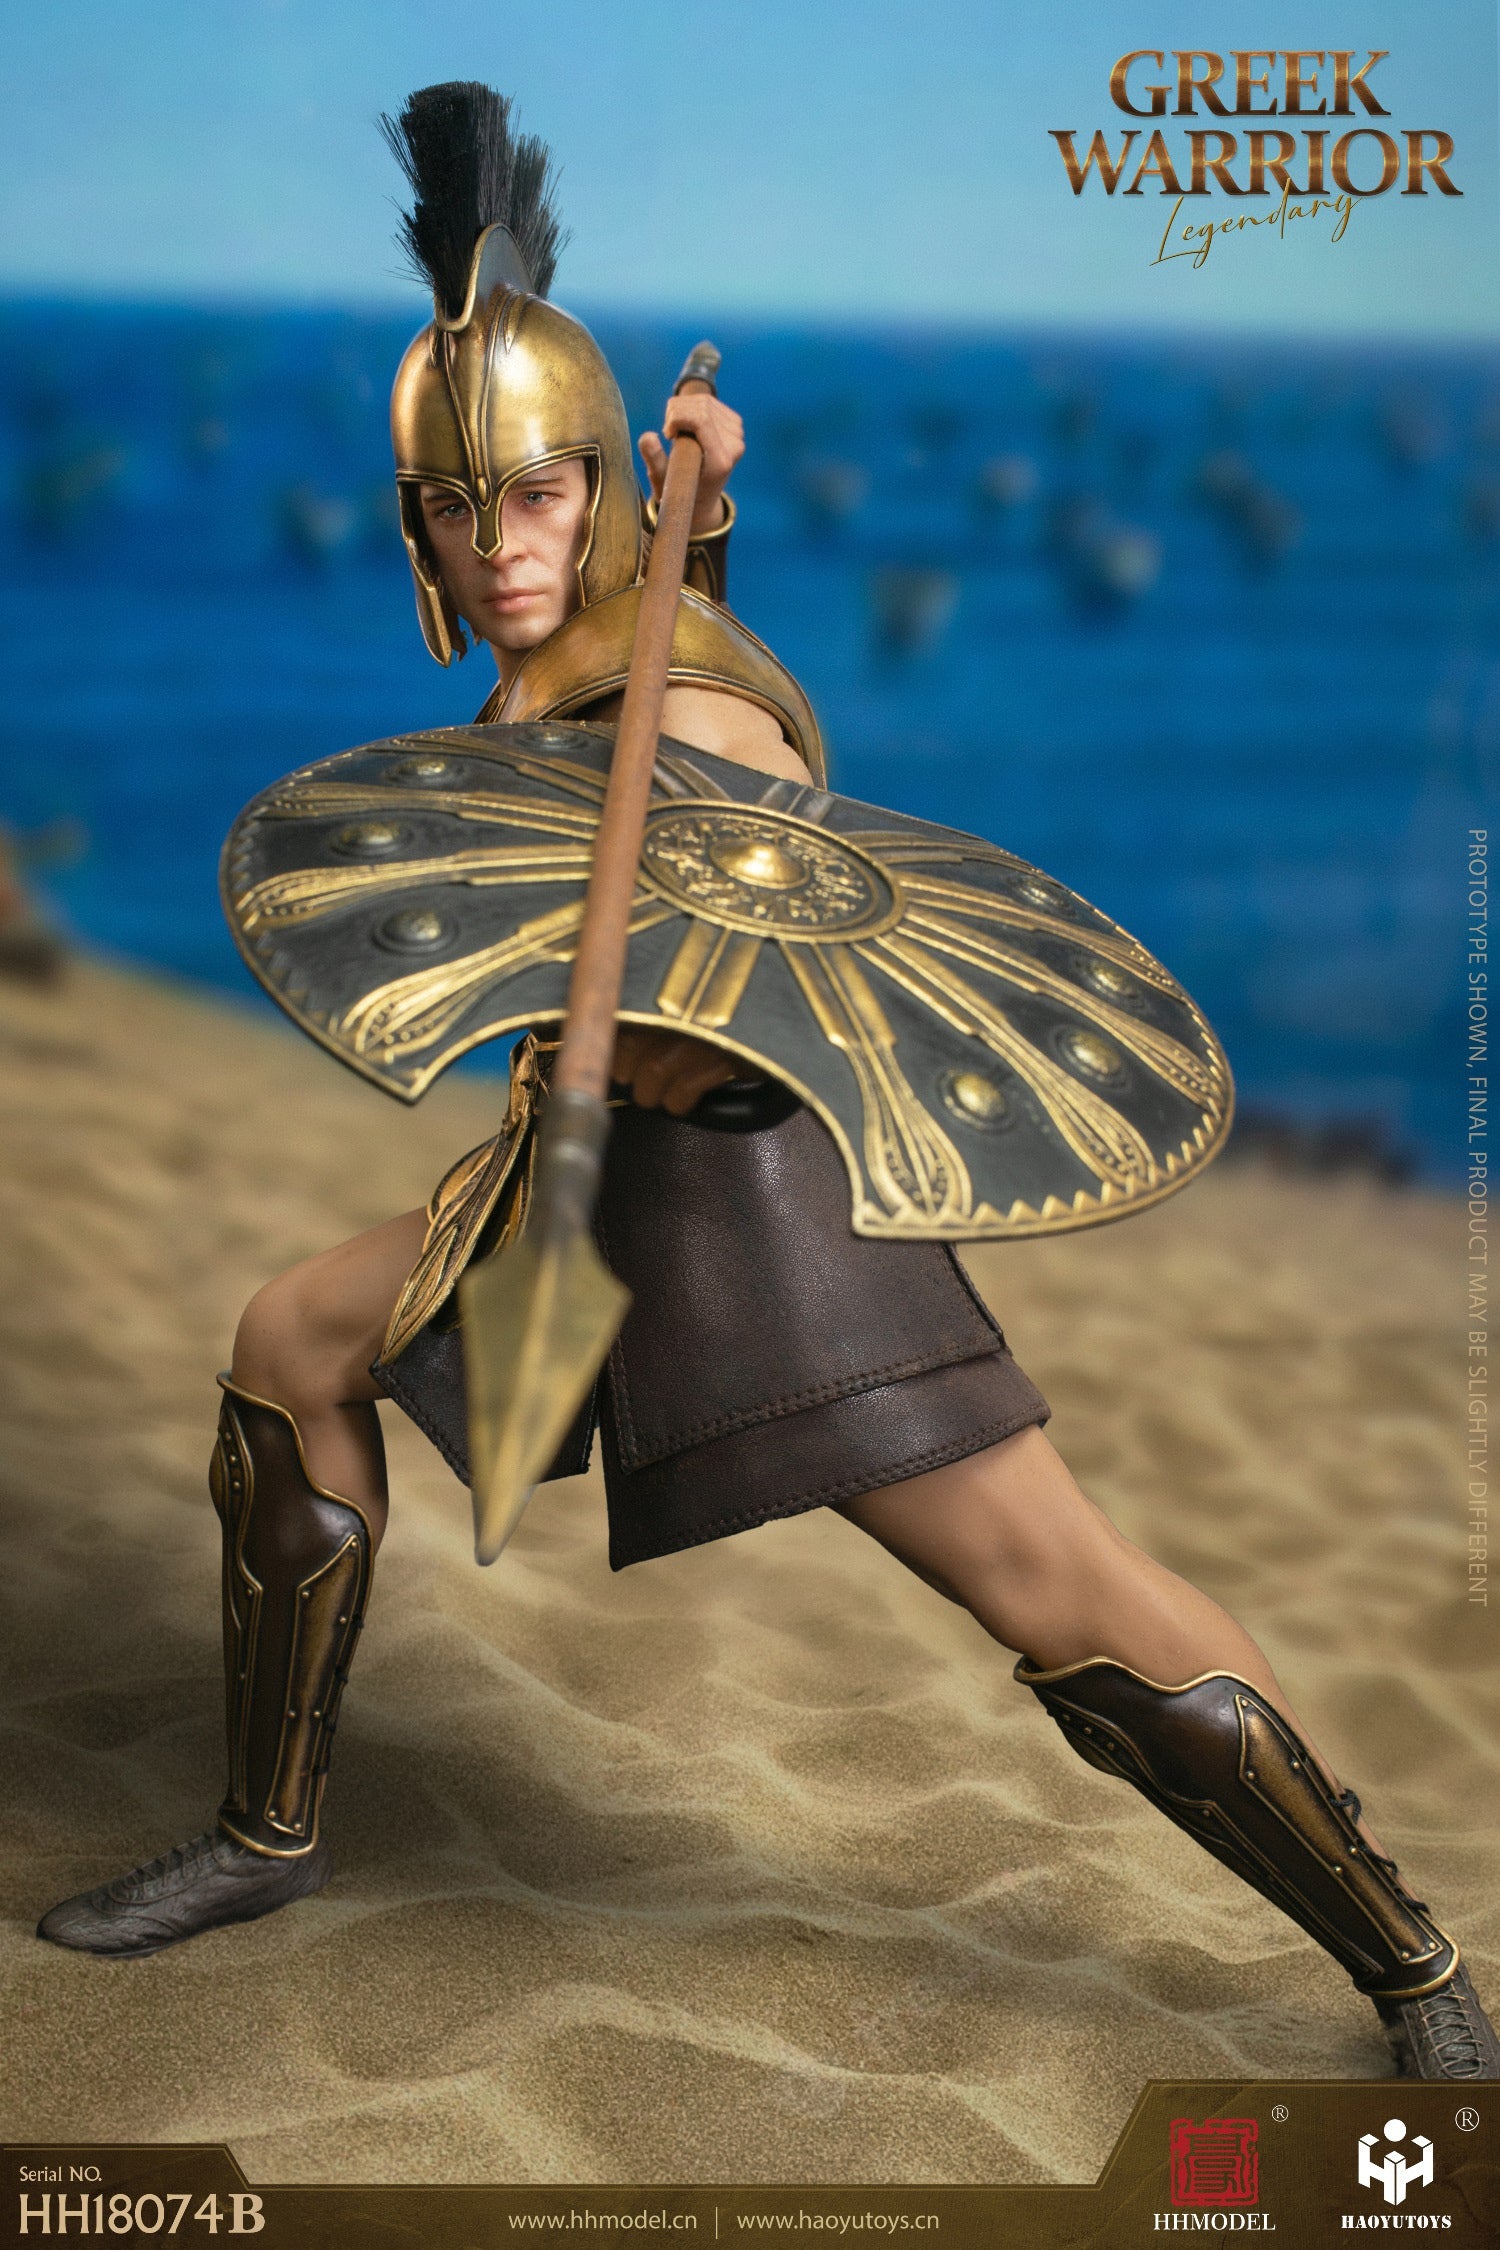 Greek Warrior: Standard Figure: Haoyu Toys